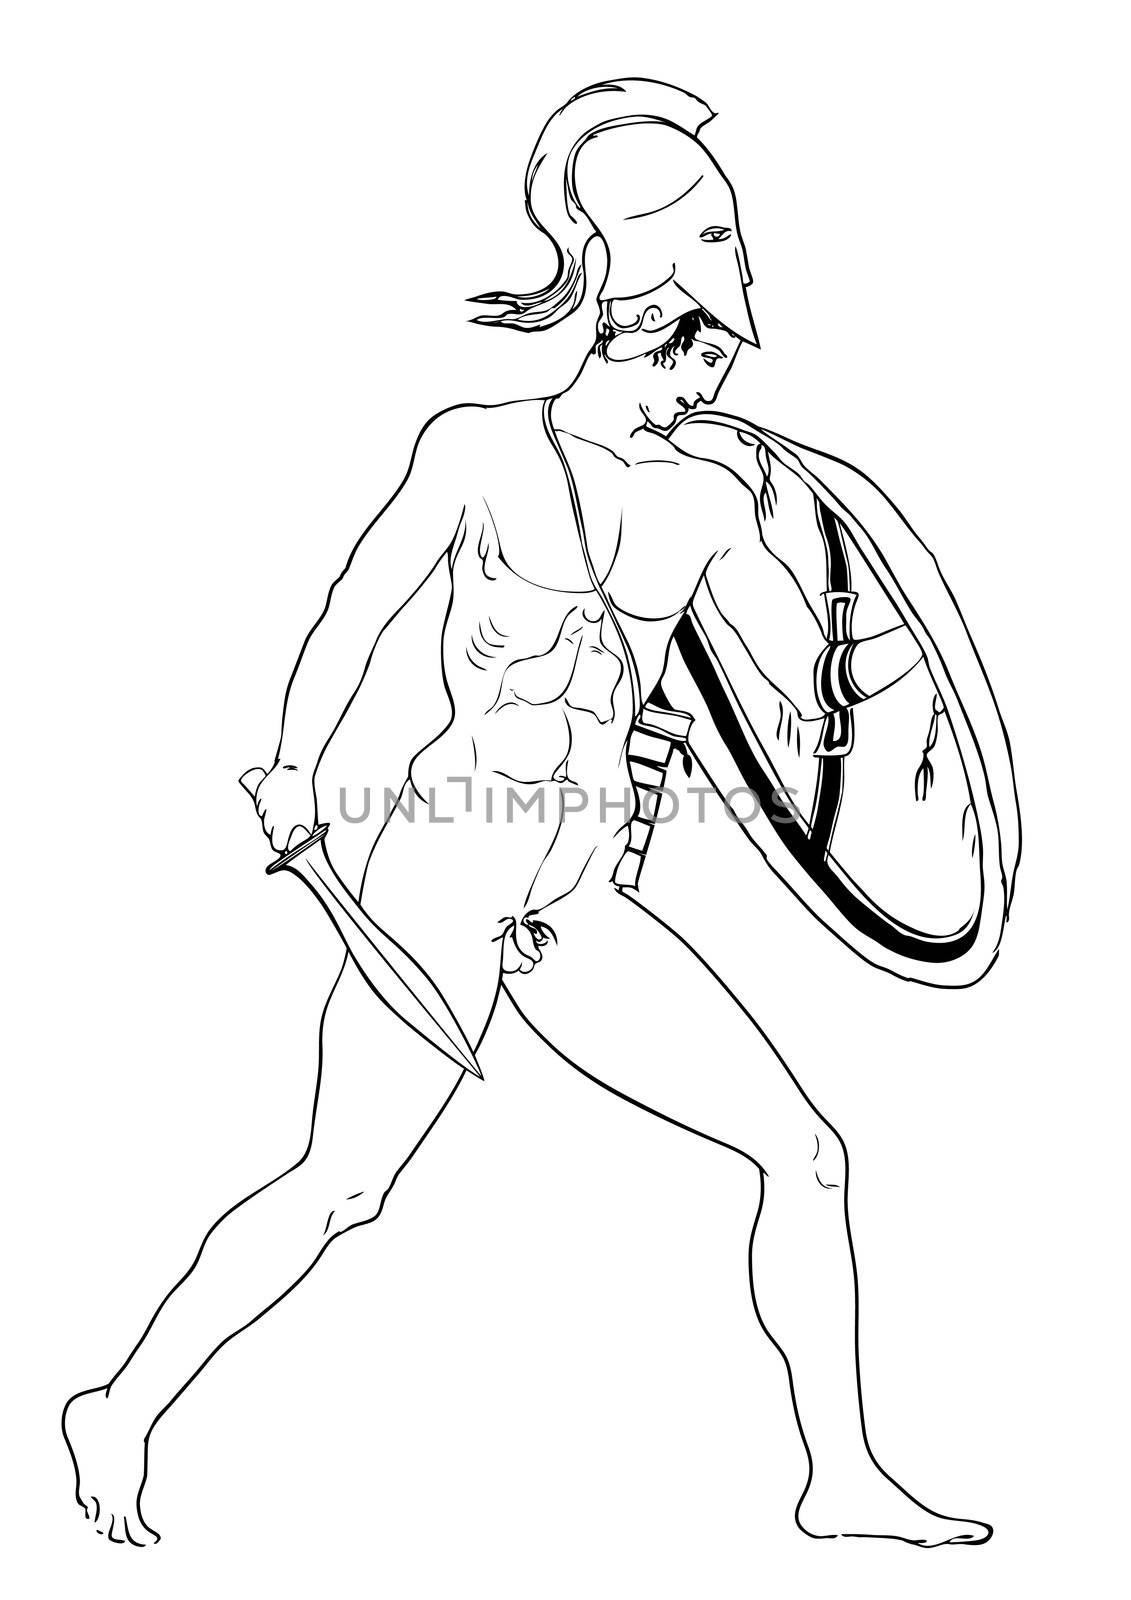 Hadn drawn sketch of the warrior of ancient Greece - vector